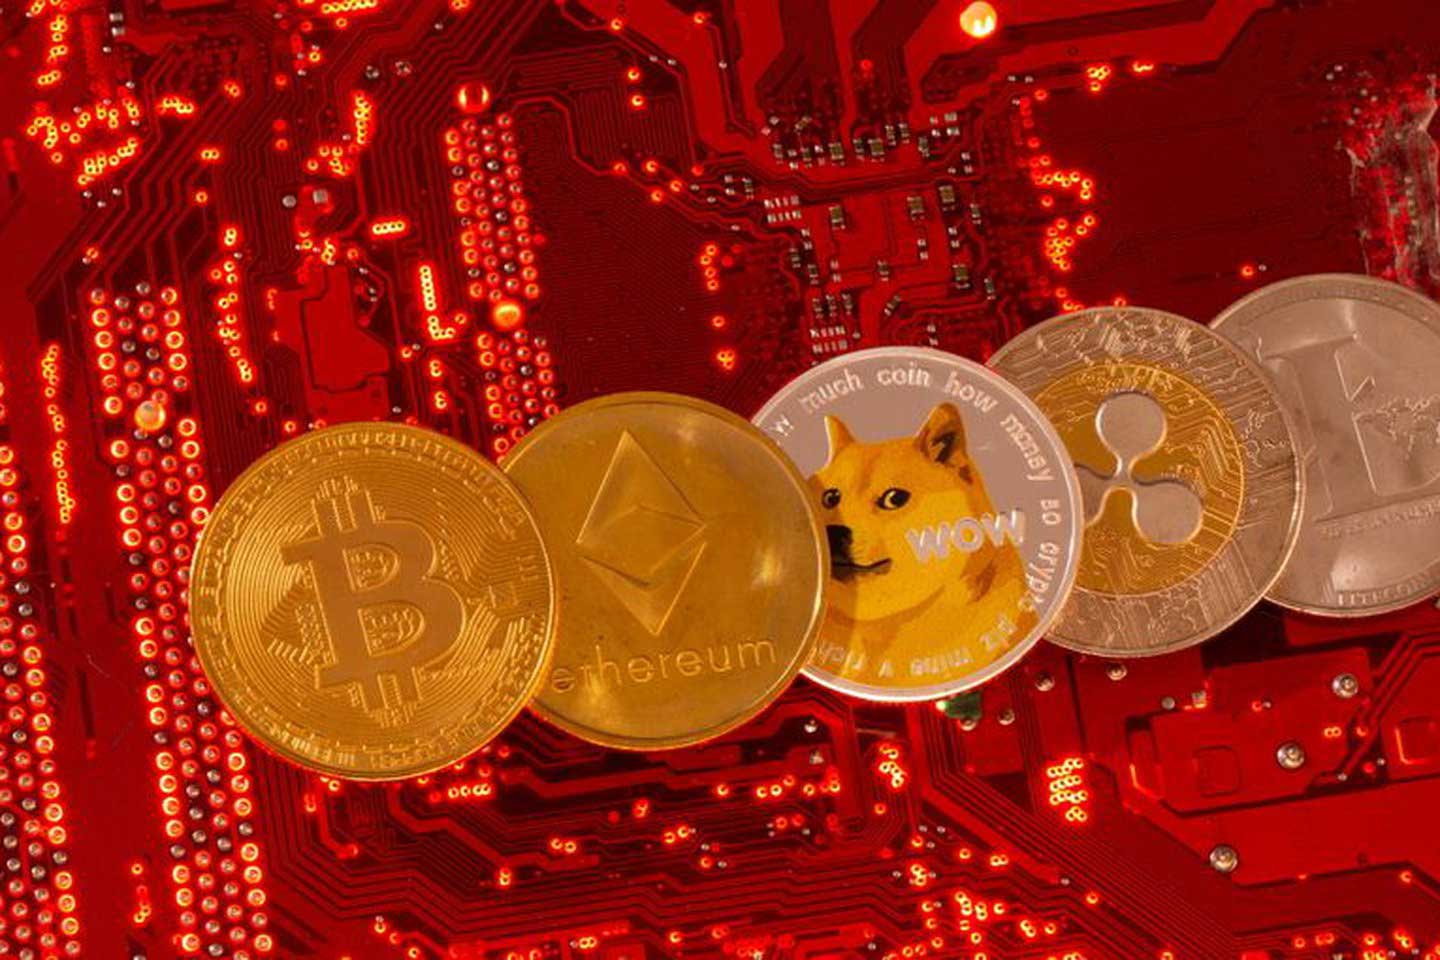 Représentations des crypto-monnaies Bitcoin, Ethereum, DogeCoin, Ripple, Litecoin